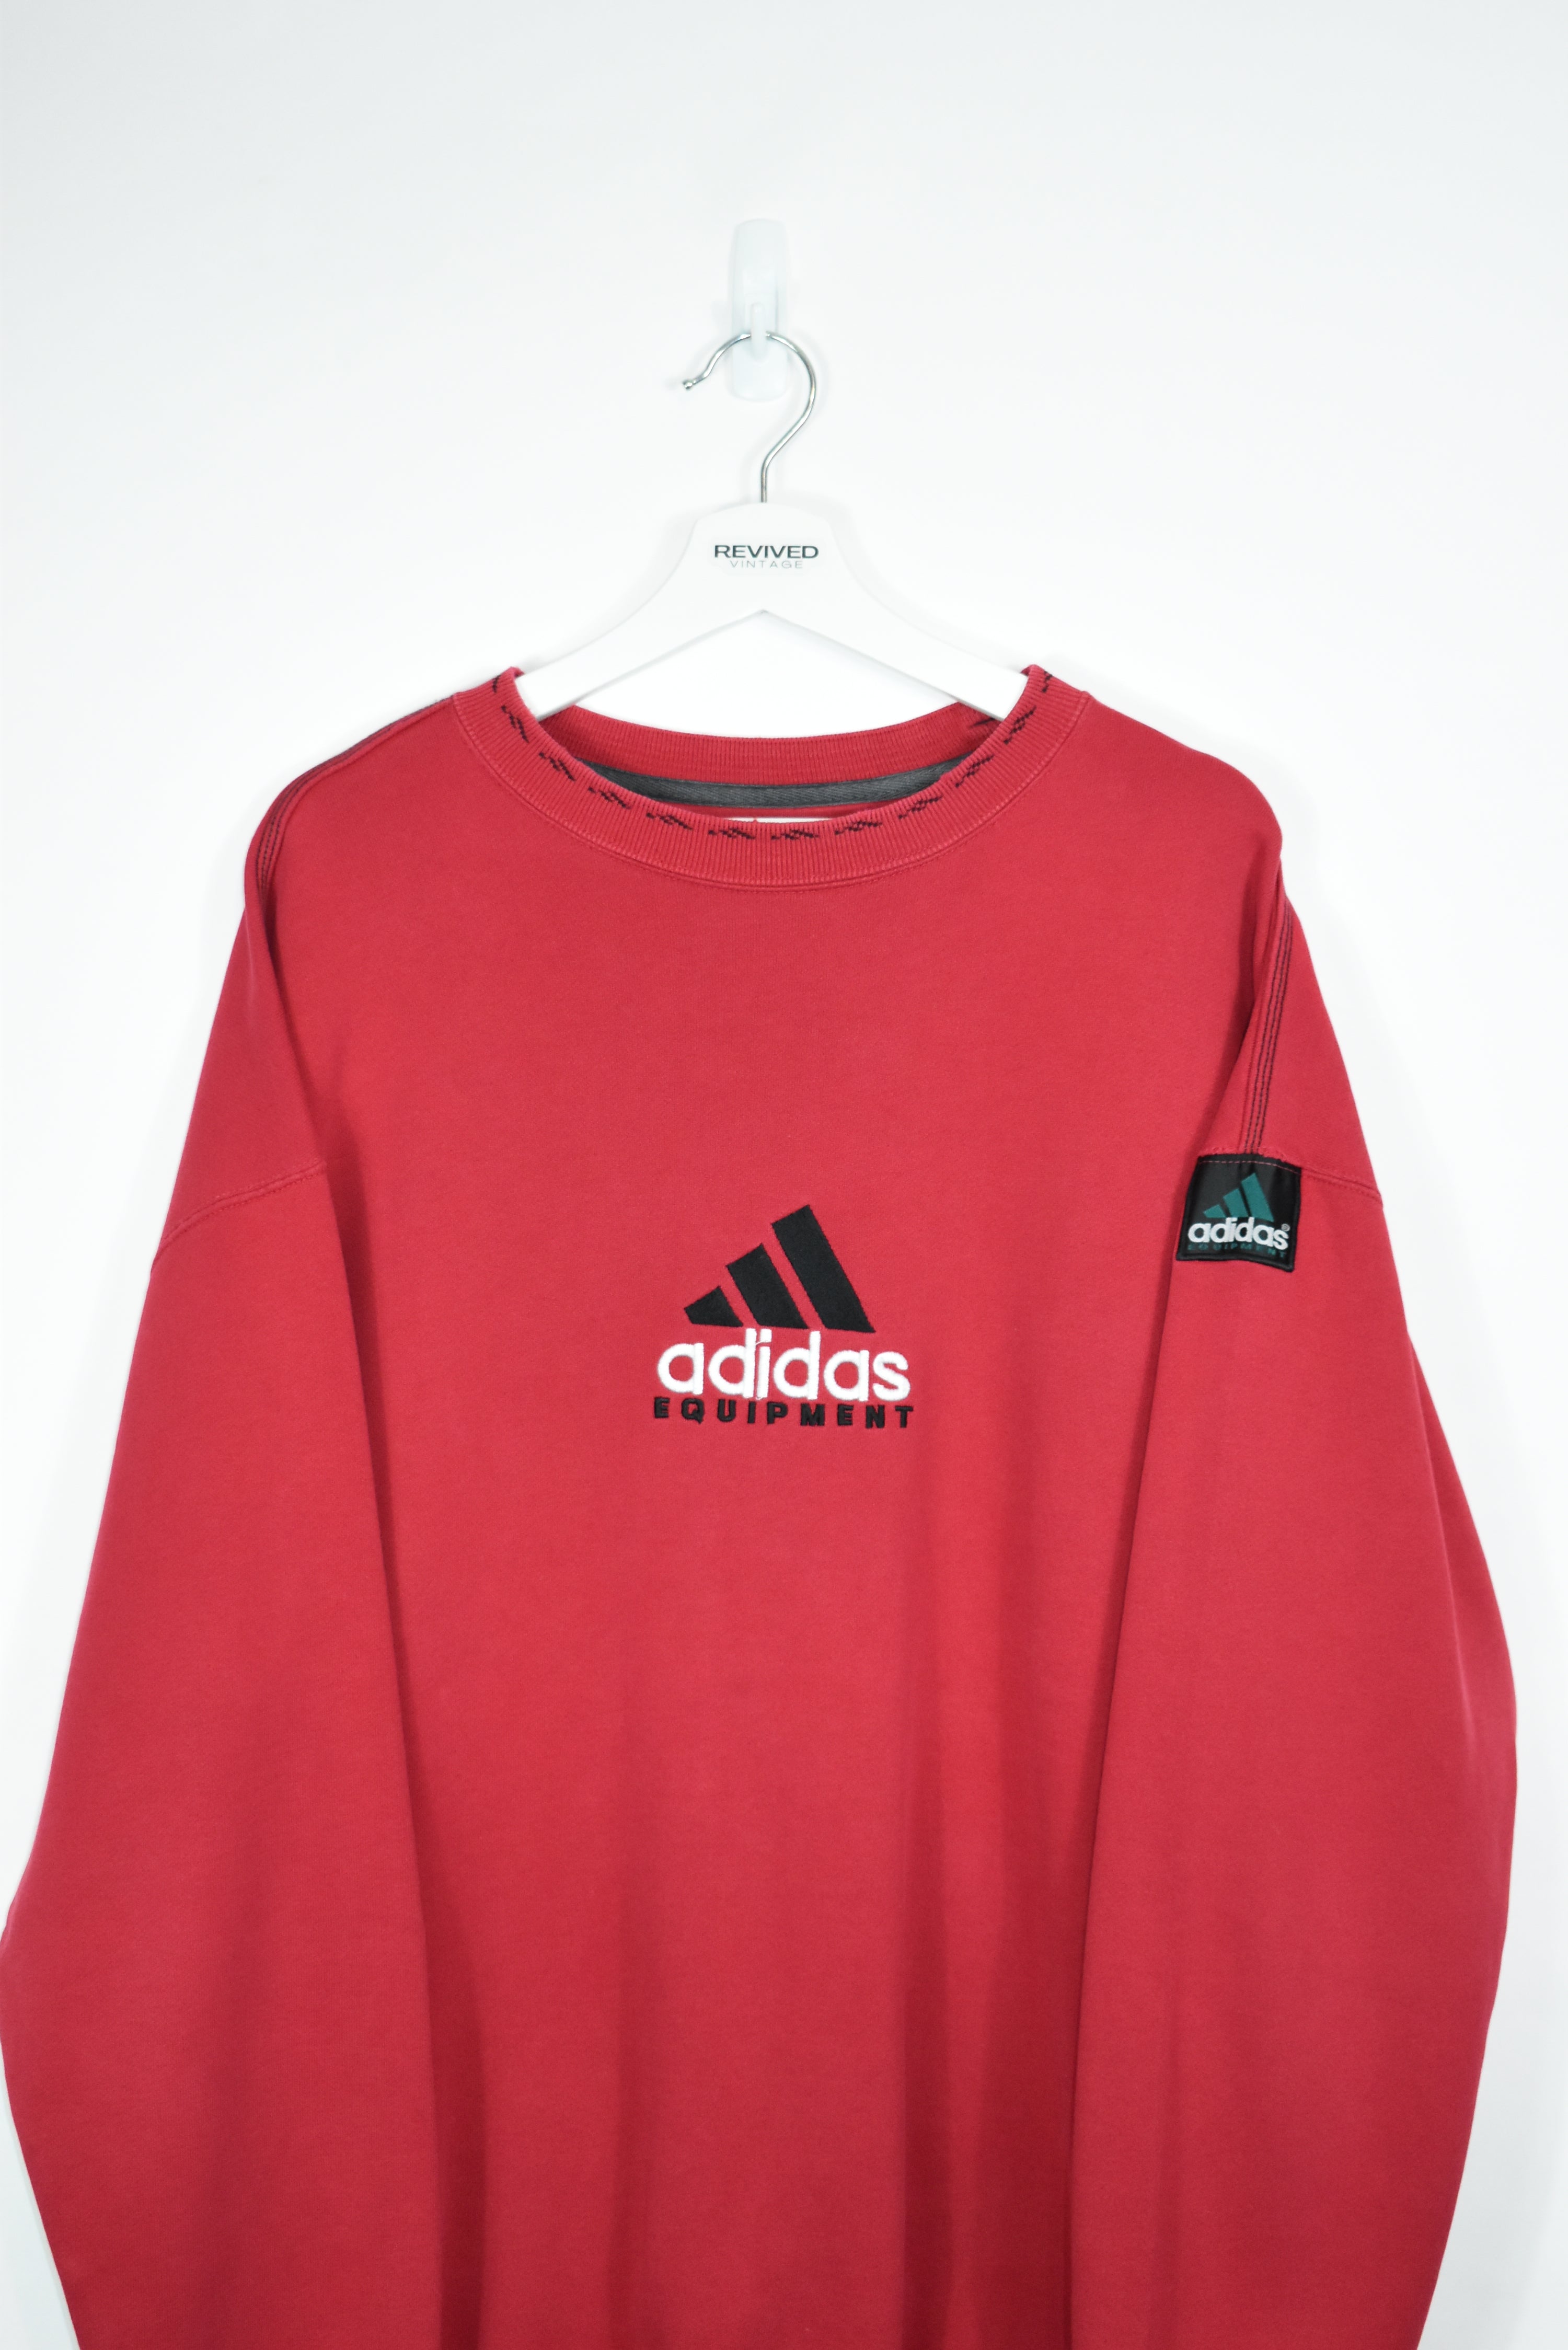 Vintage RARE Adidas Equipment Red Embroidery Sweatshirt XLARGE